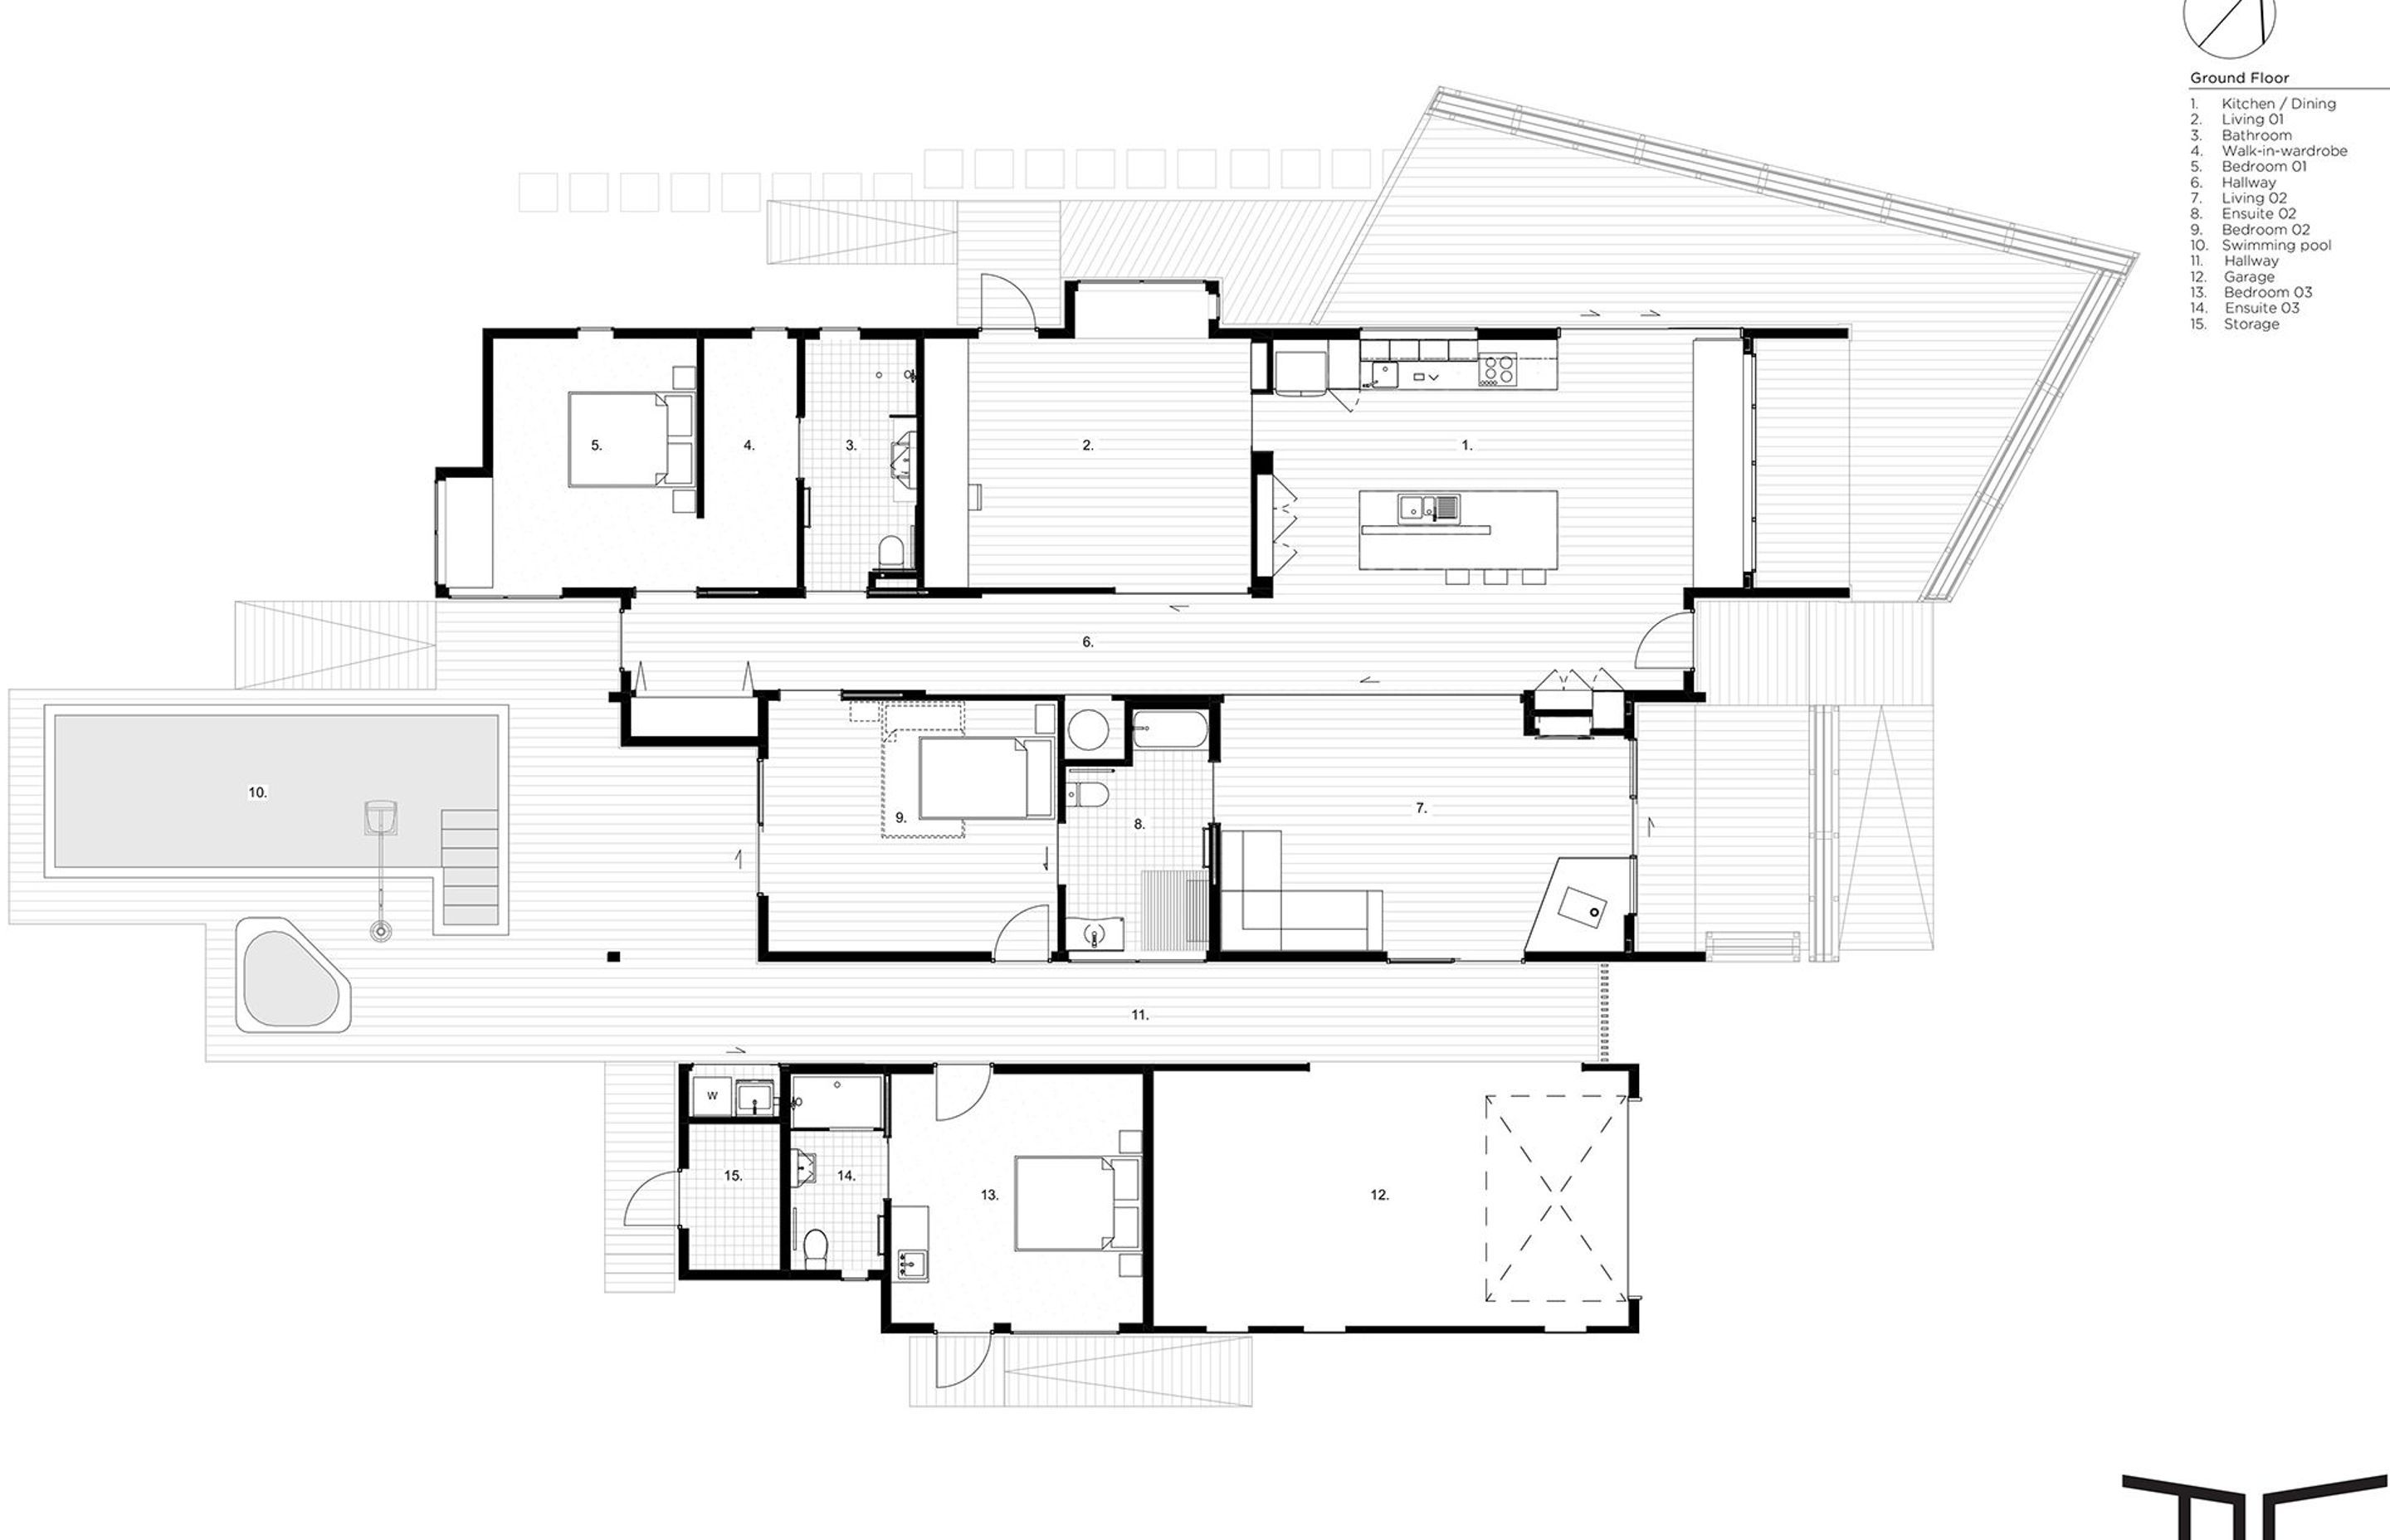 Waikanae House's floor plan.